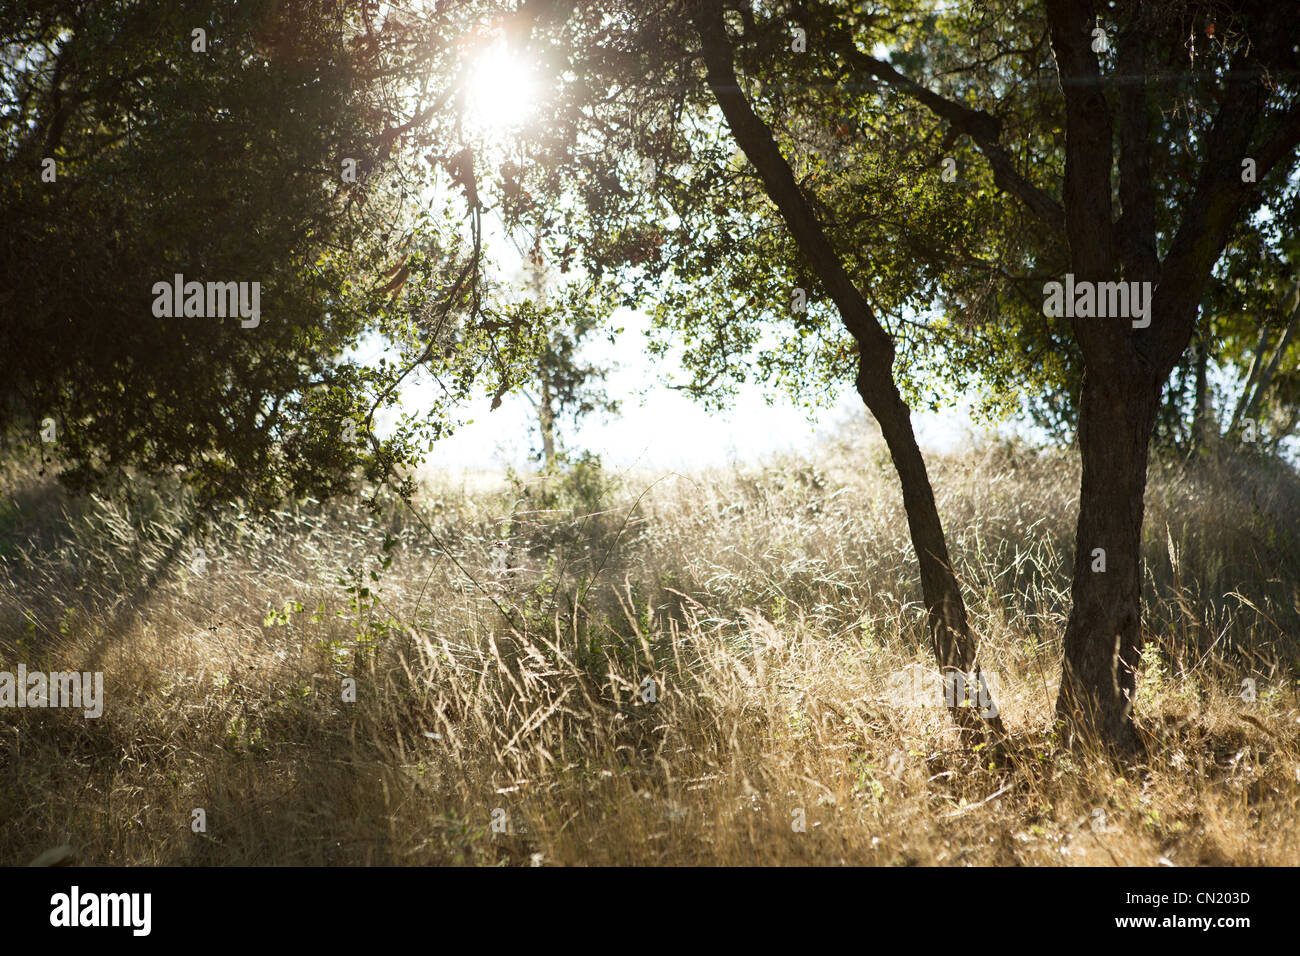 Sun shining through the trees of an open, grassy field Stock Photo